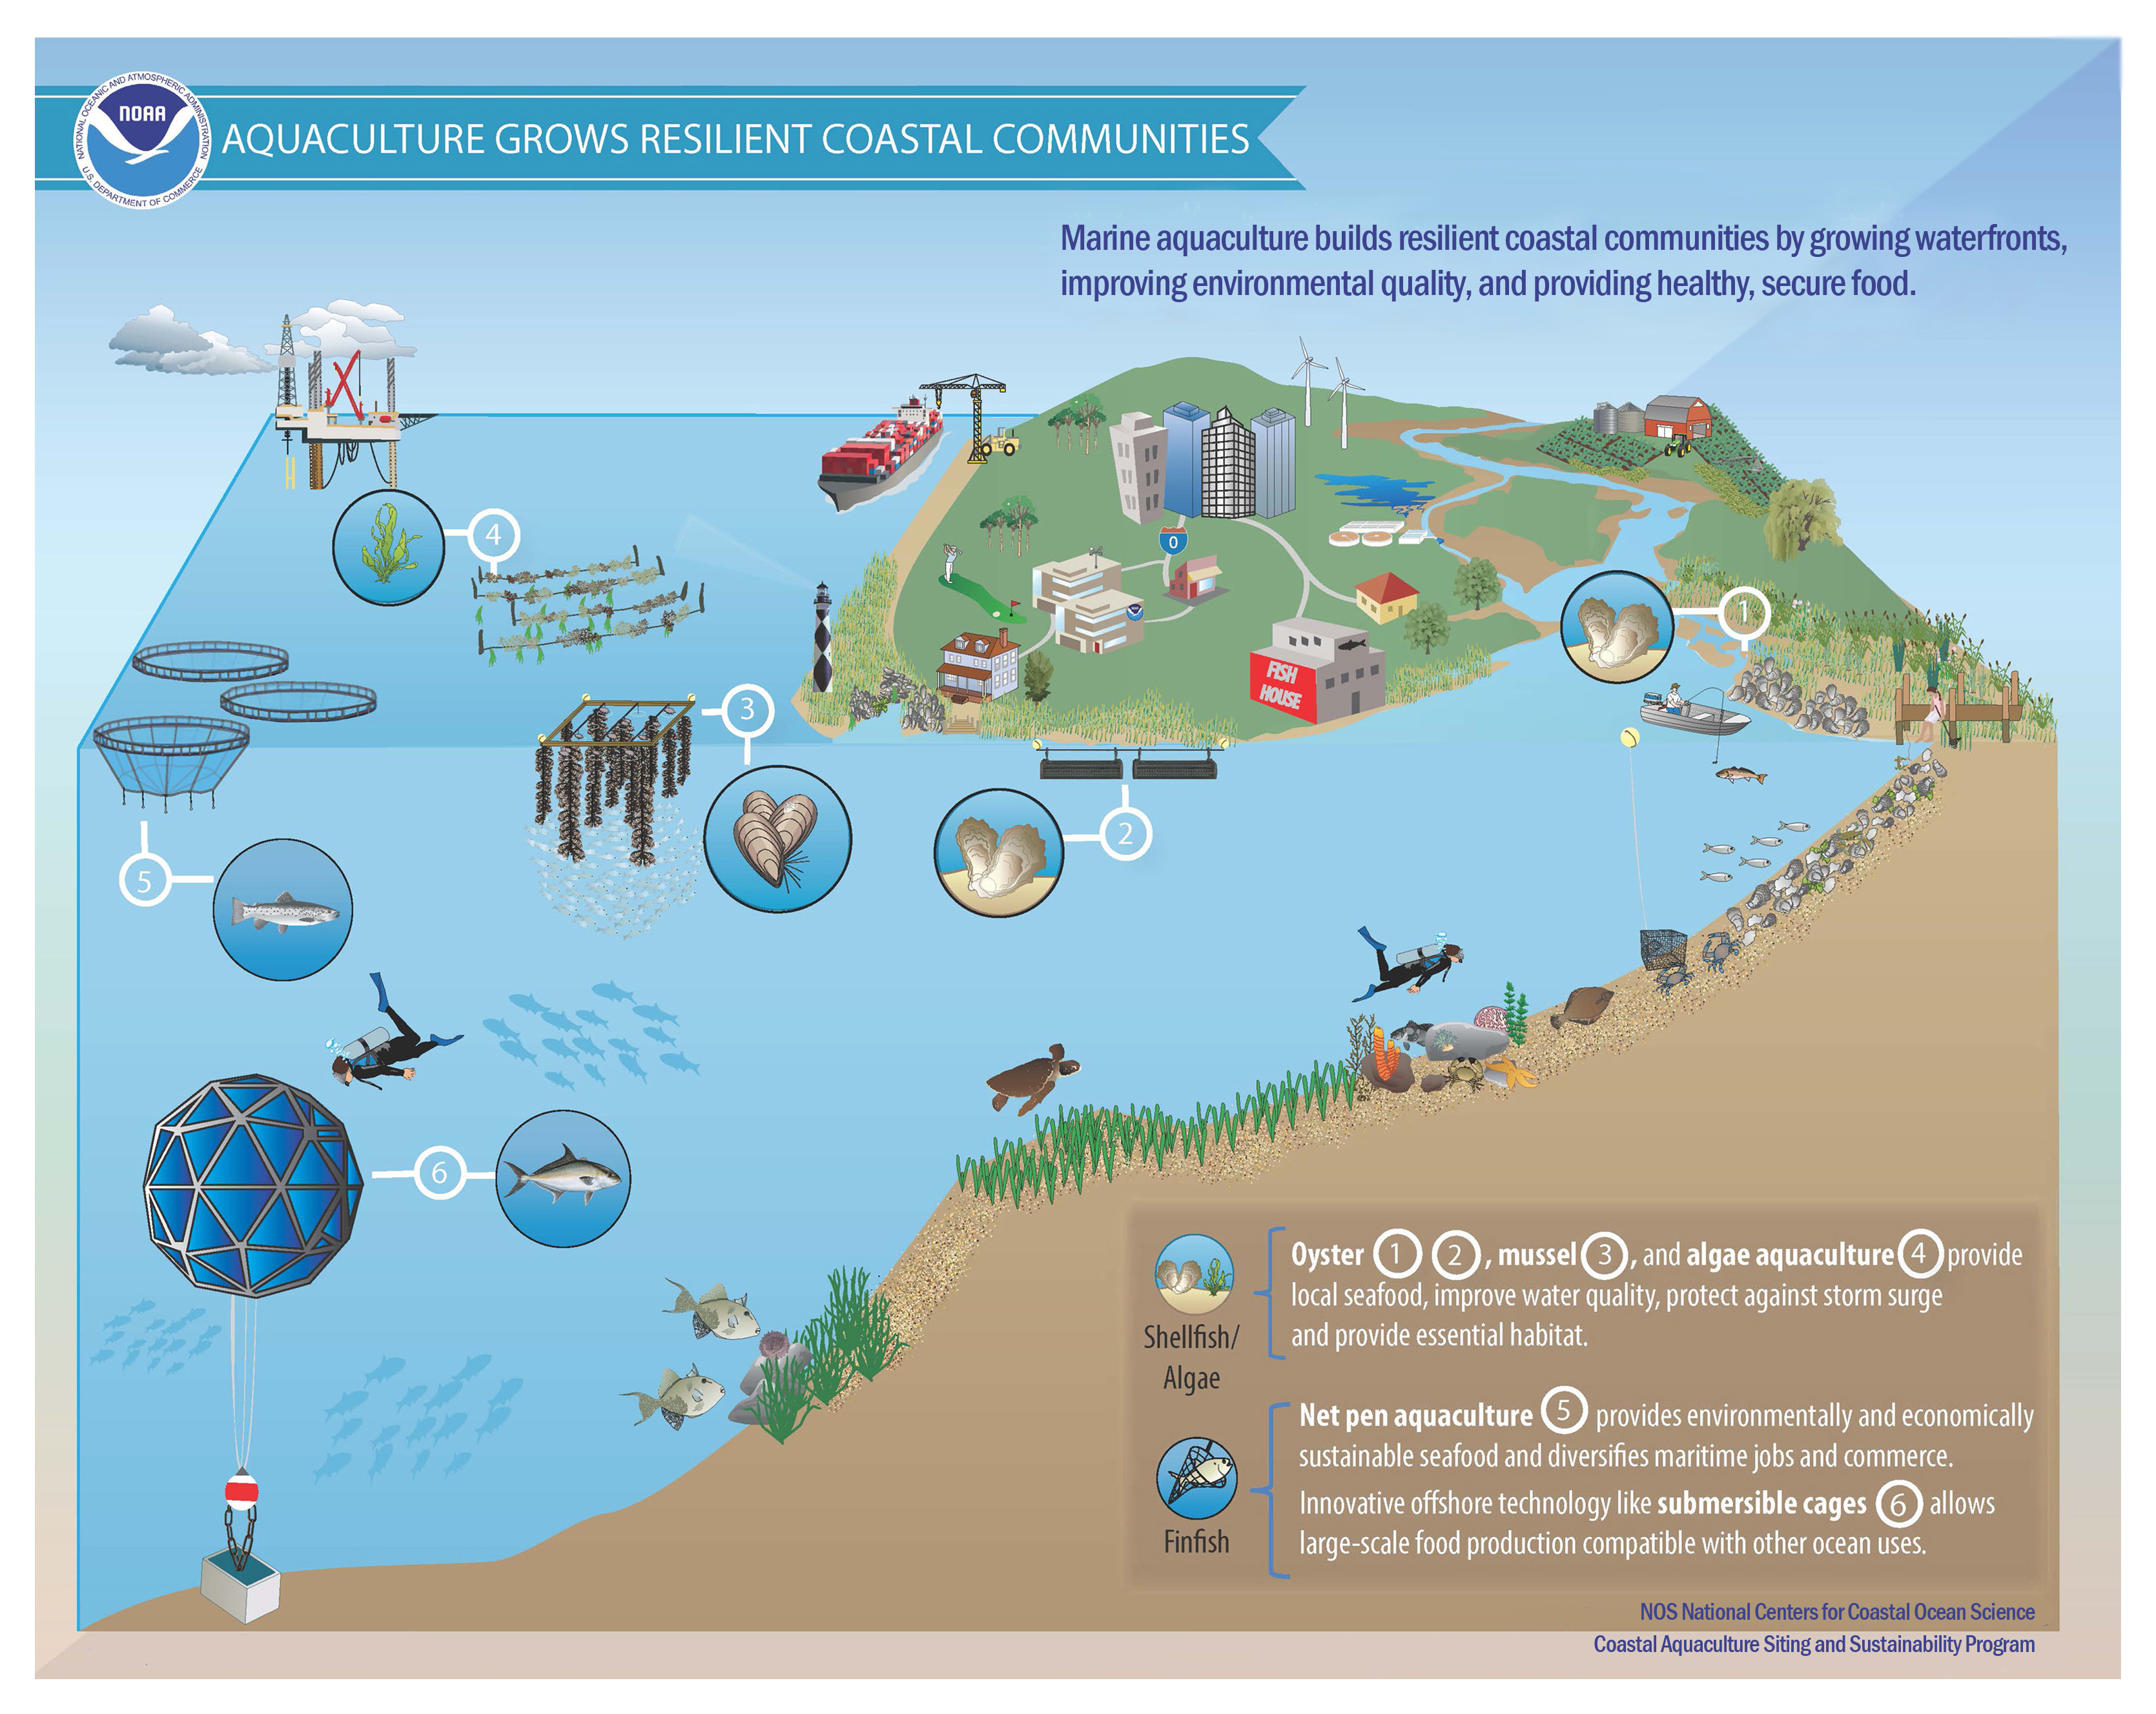 Aquaculture grows resilient coastal communities